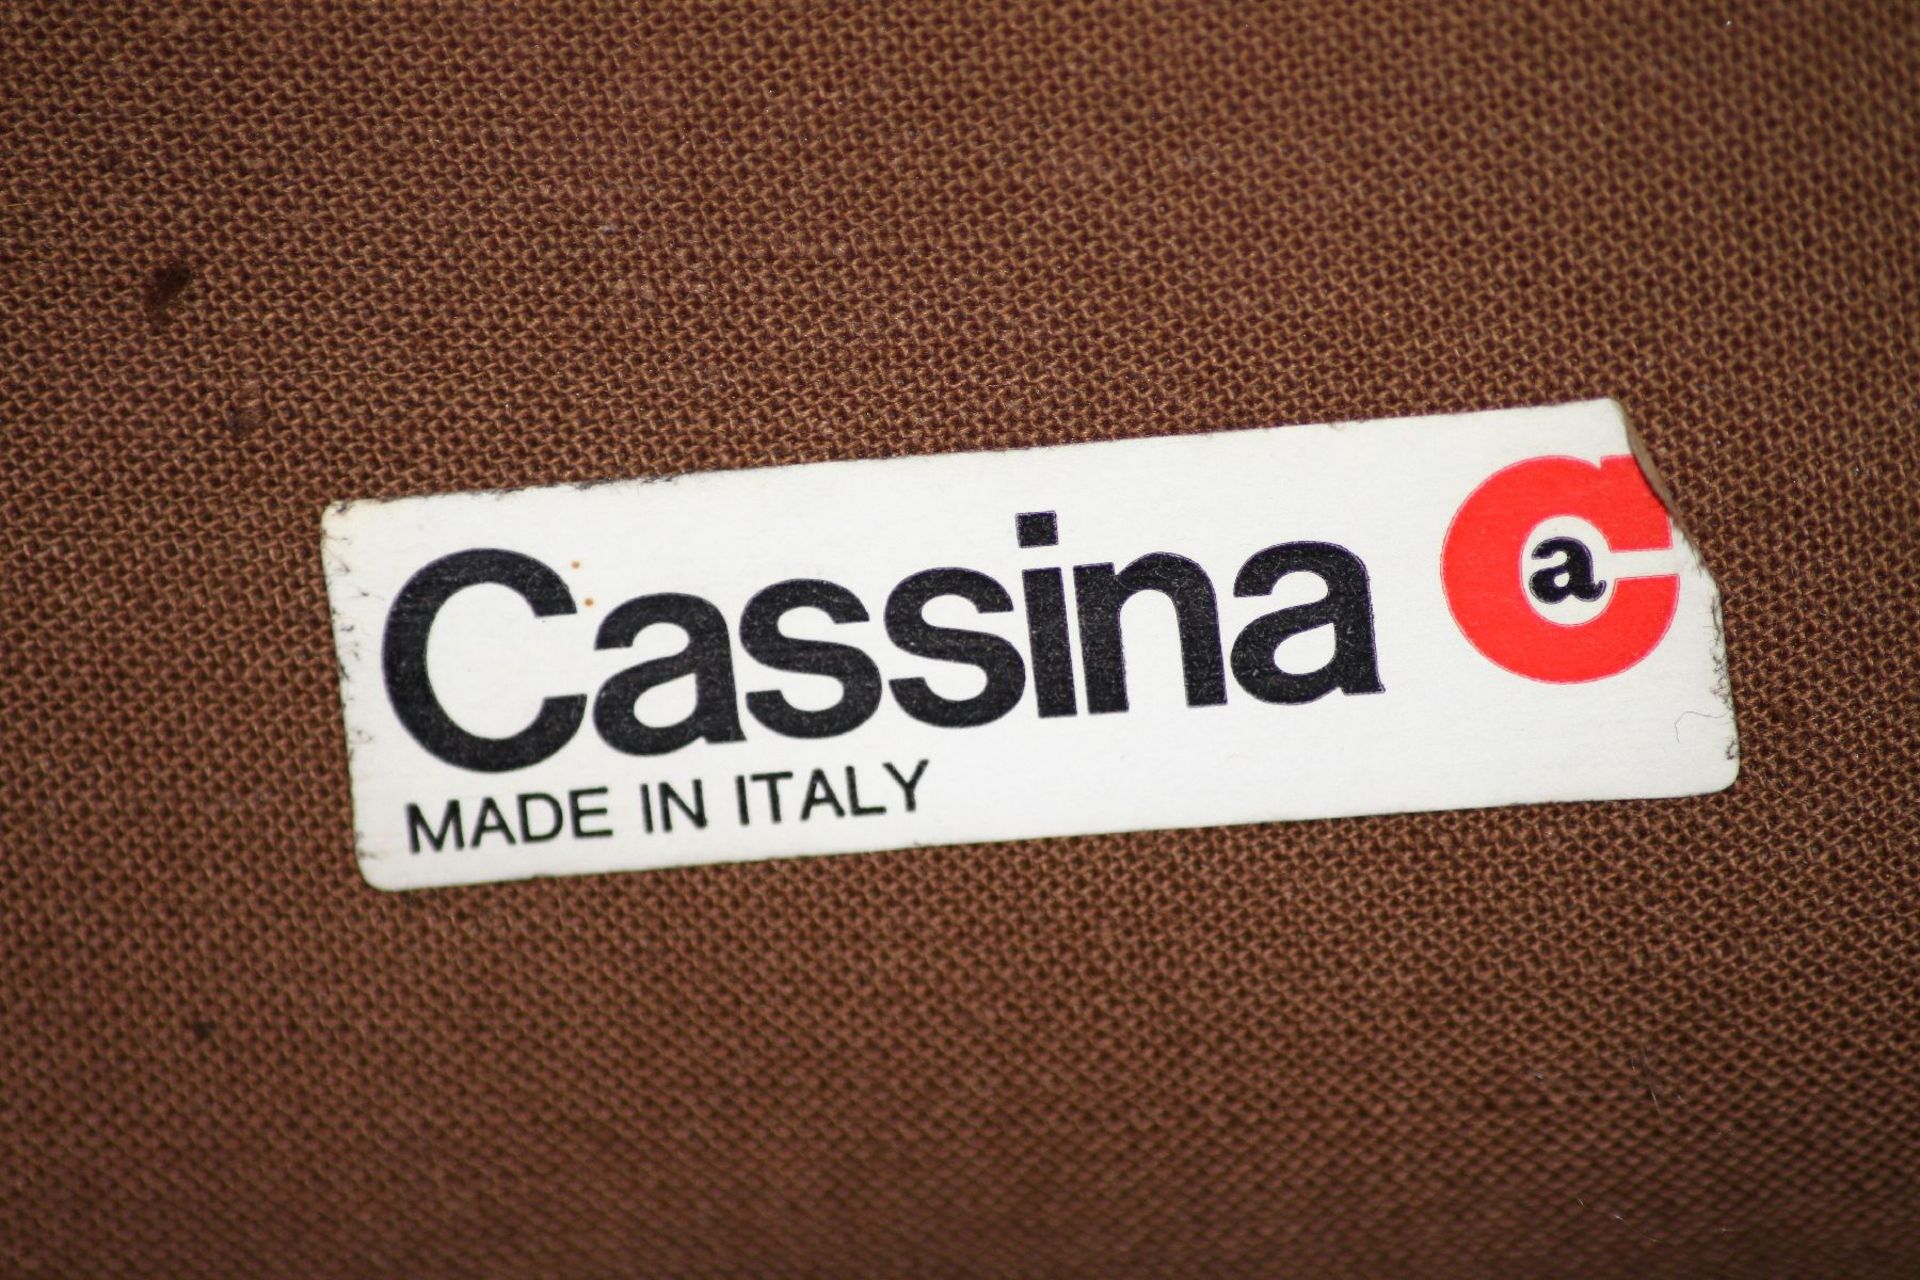 Sitzgruppe, 'Cassina', made in Italy, Modell: Maralunga, - Bild 4 aus 5